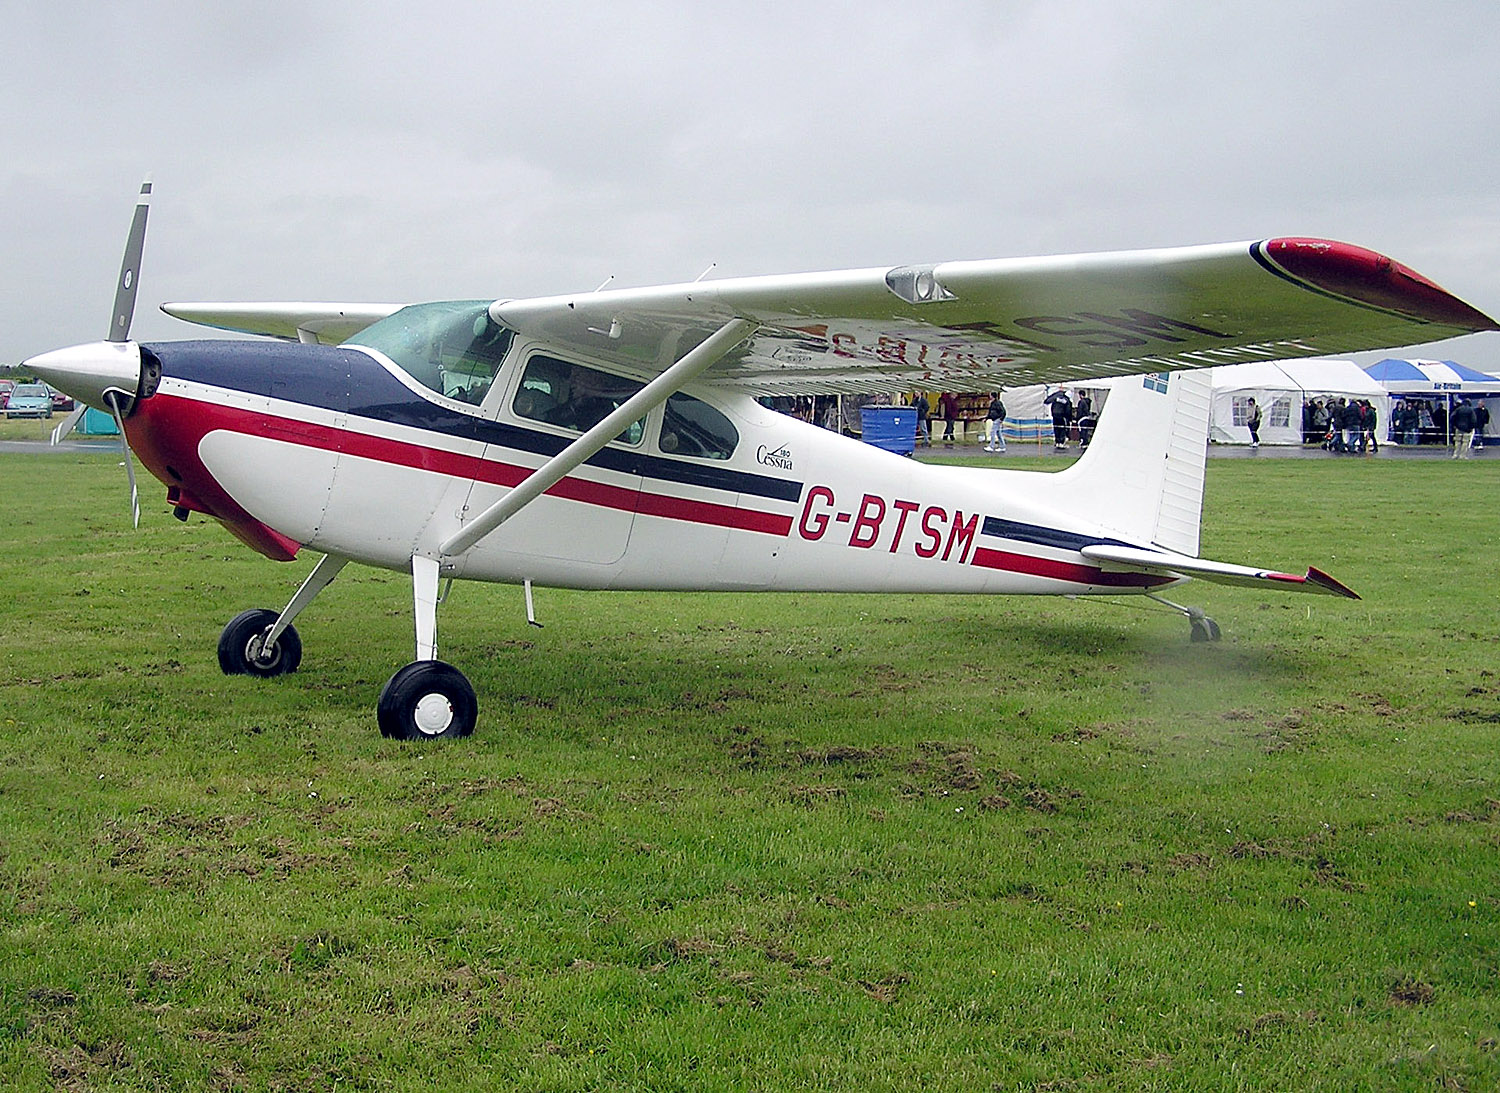 Cessna 180 & 185 Skywagon next